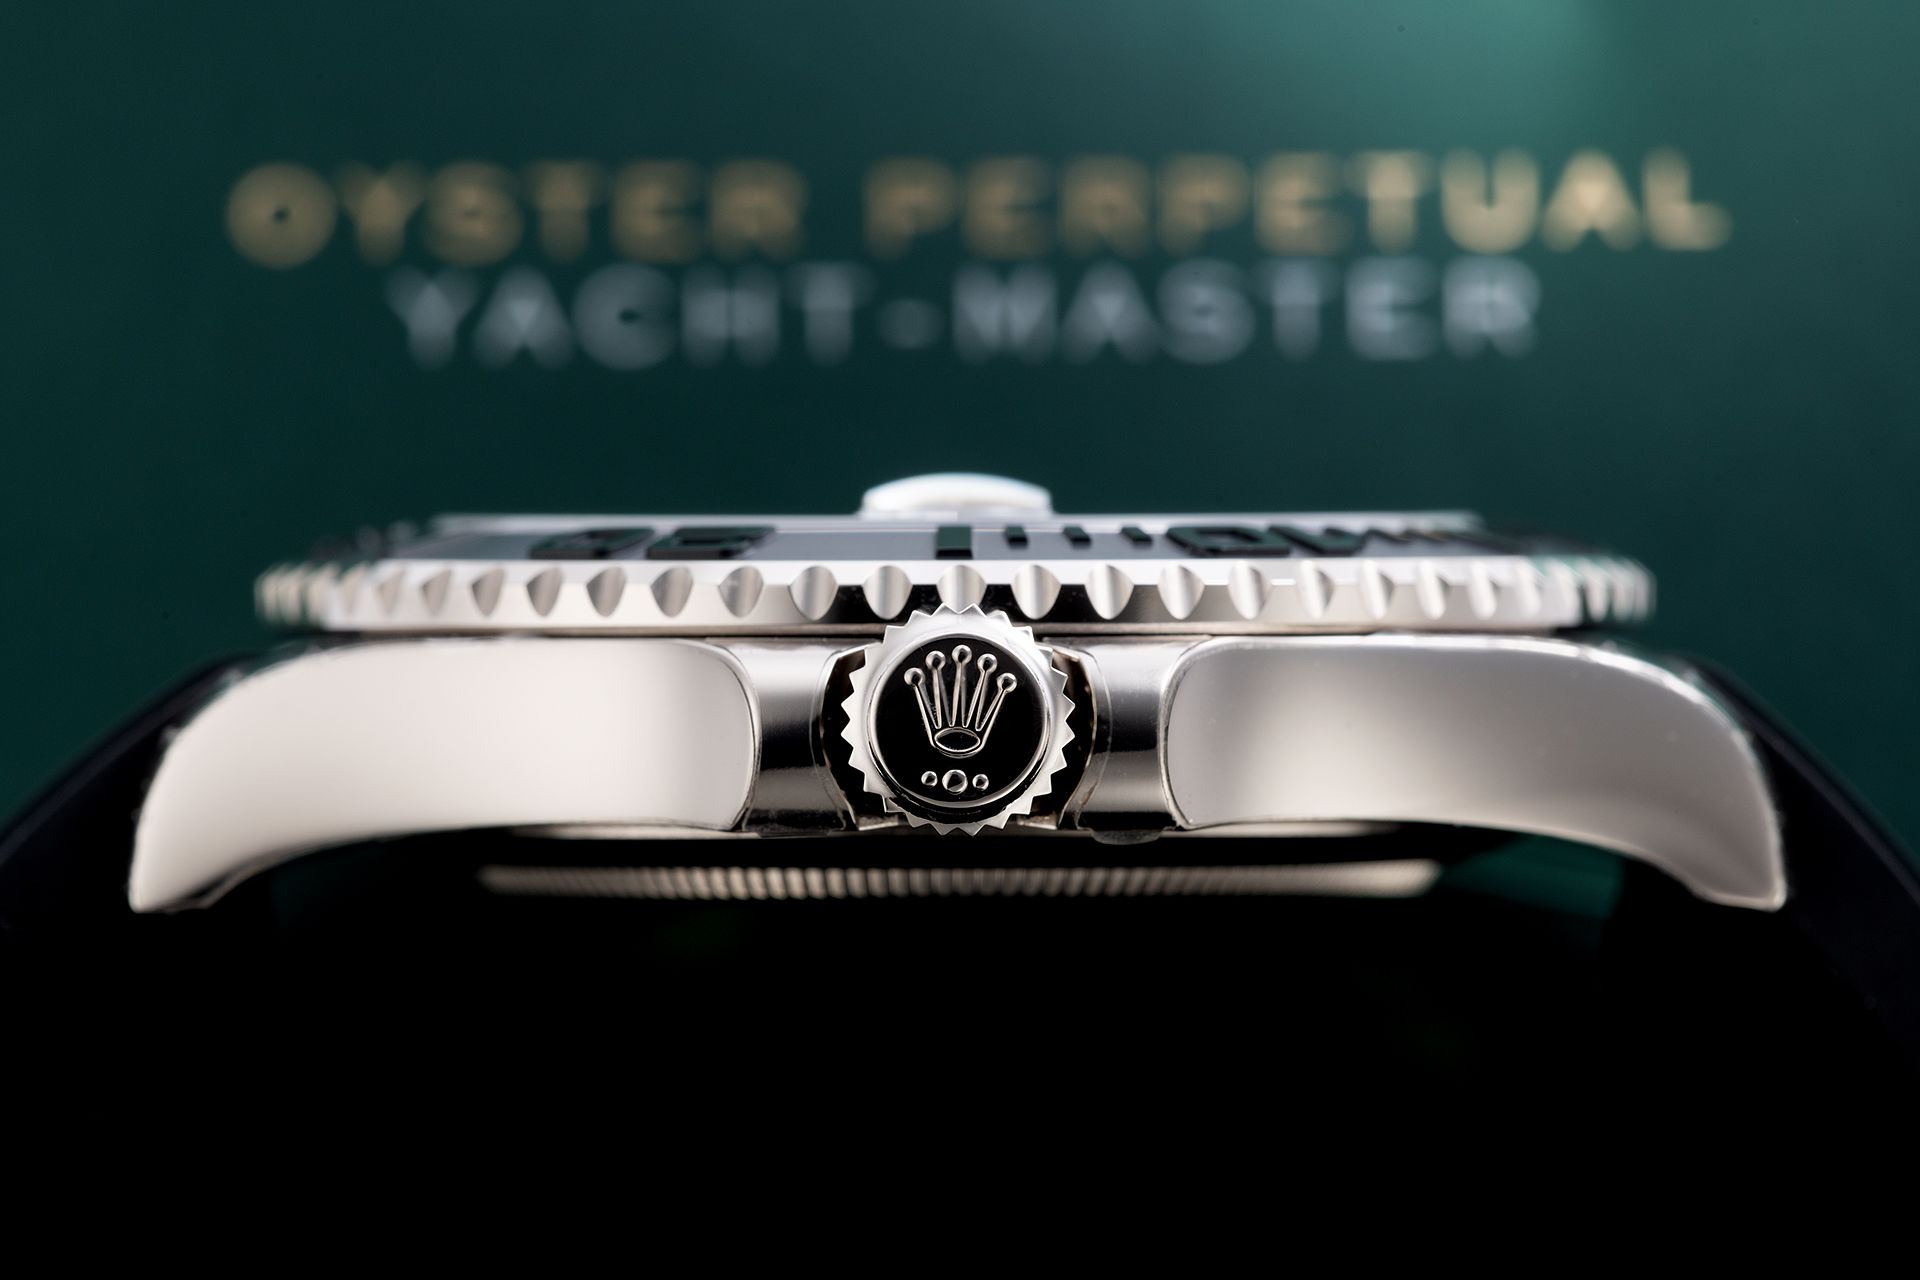 ref 226659 | 'New Model' 5 Year Warranty | Rolex Yacht-Master